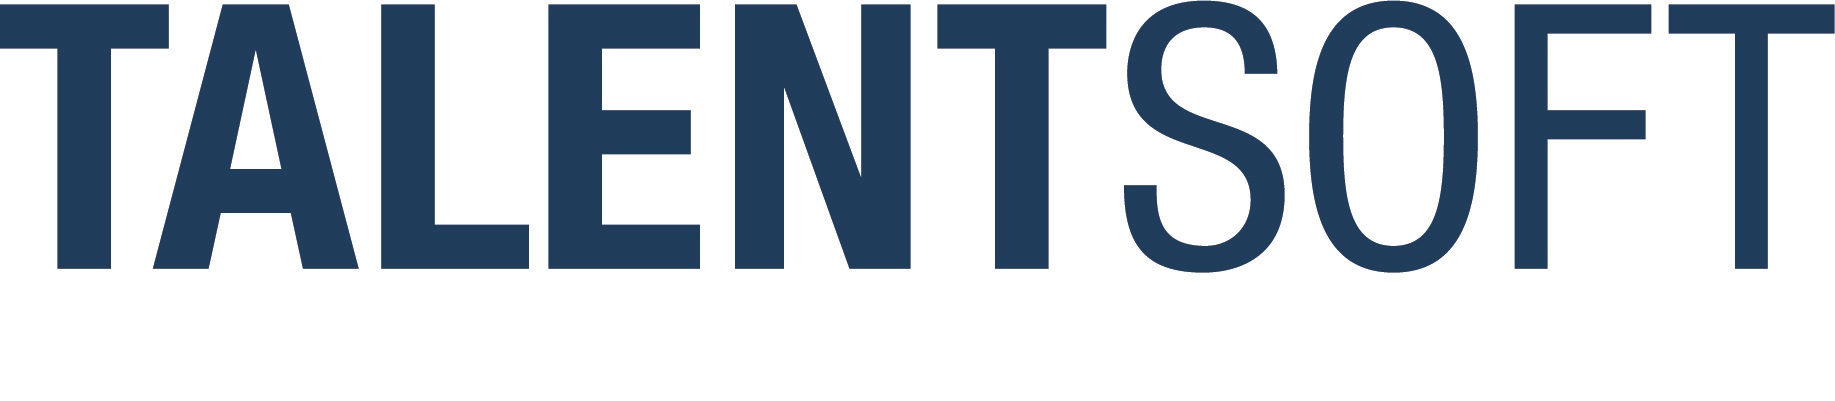 Talentsoft_new-logo-CMJN-800×400